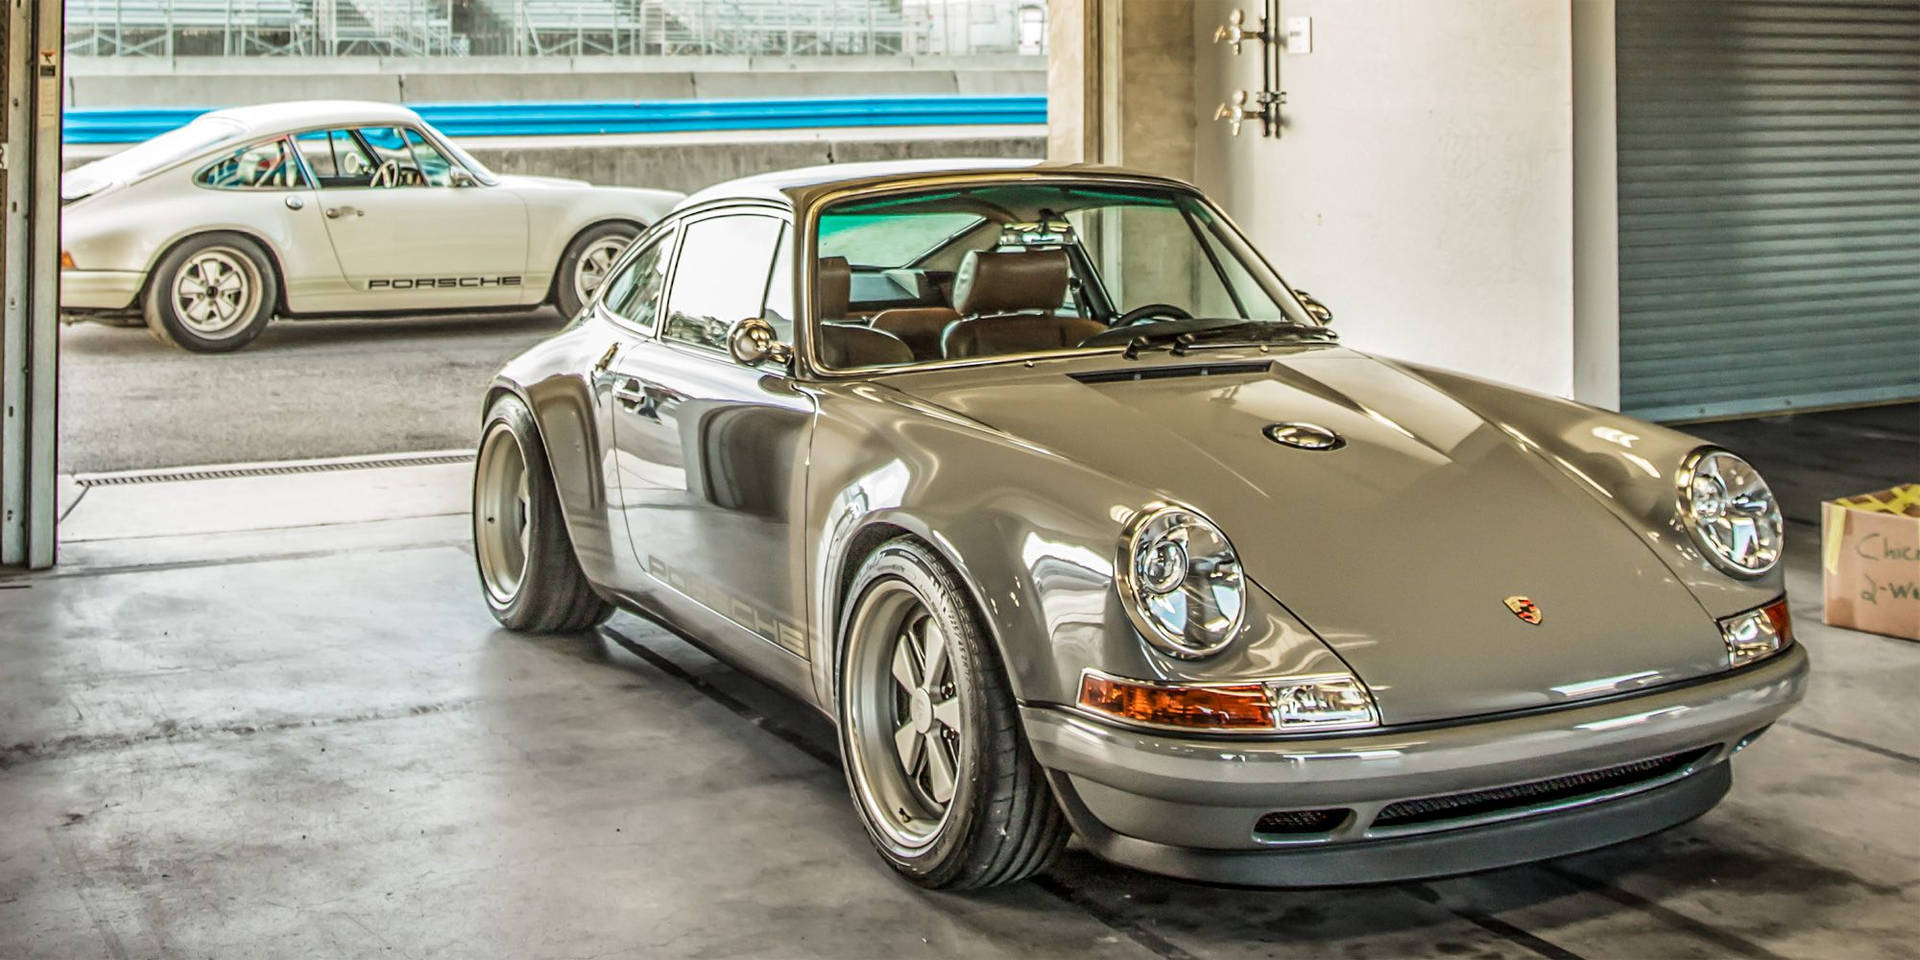 Singer Porsche 911 Turbo Cars Background